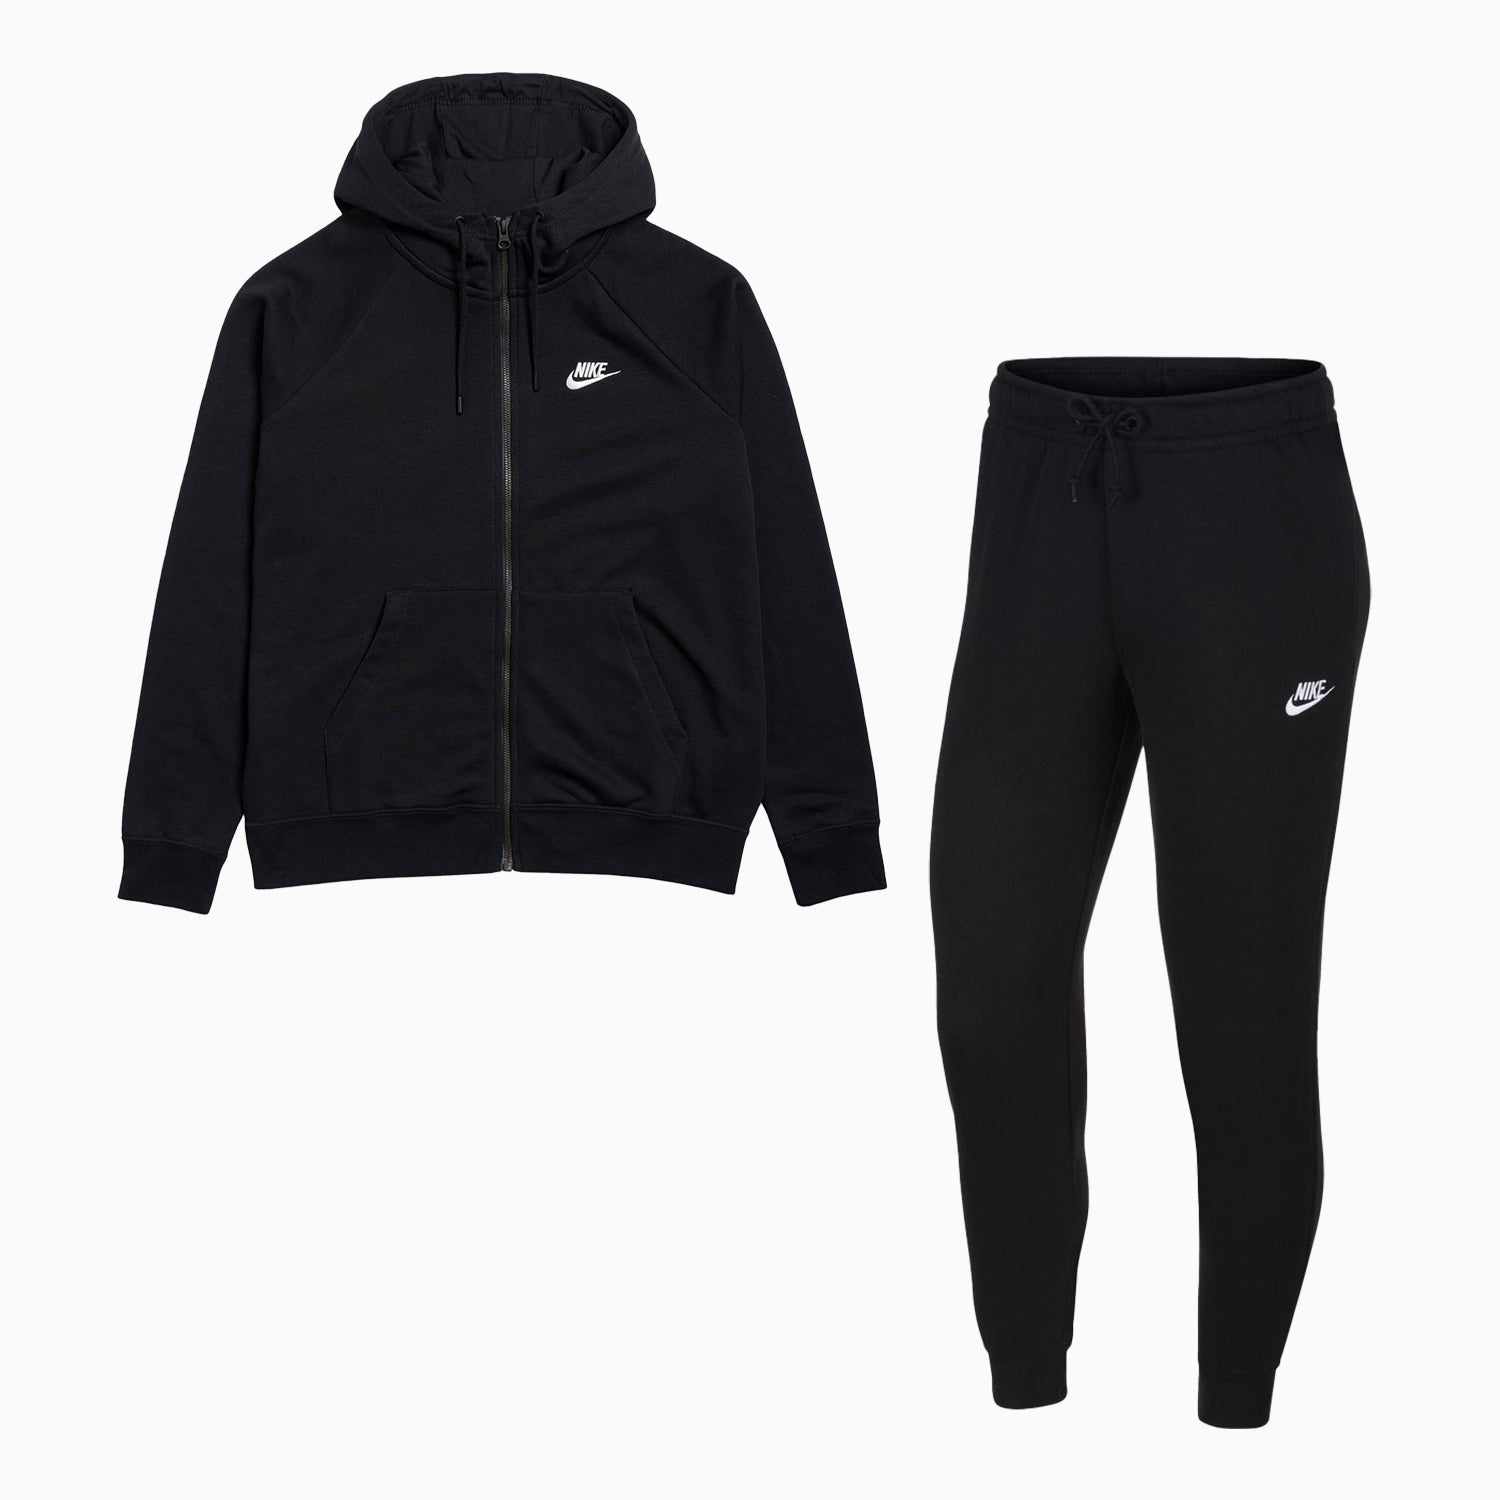 nike-womens-sportswear-essential-jogging-suit-bv4122-010-bv4095-010